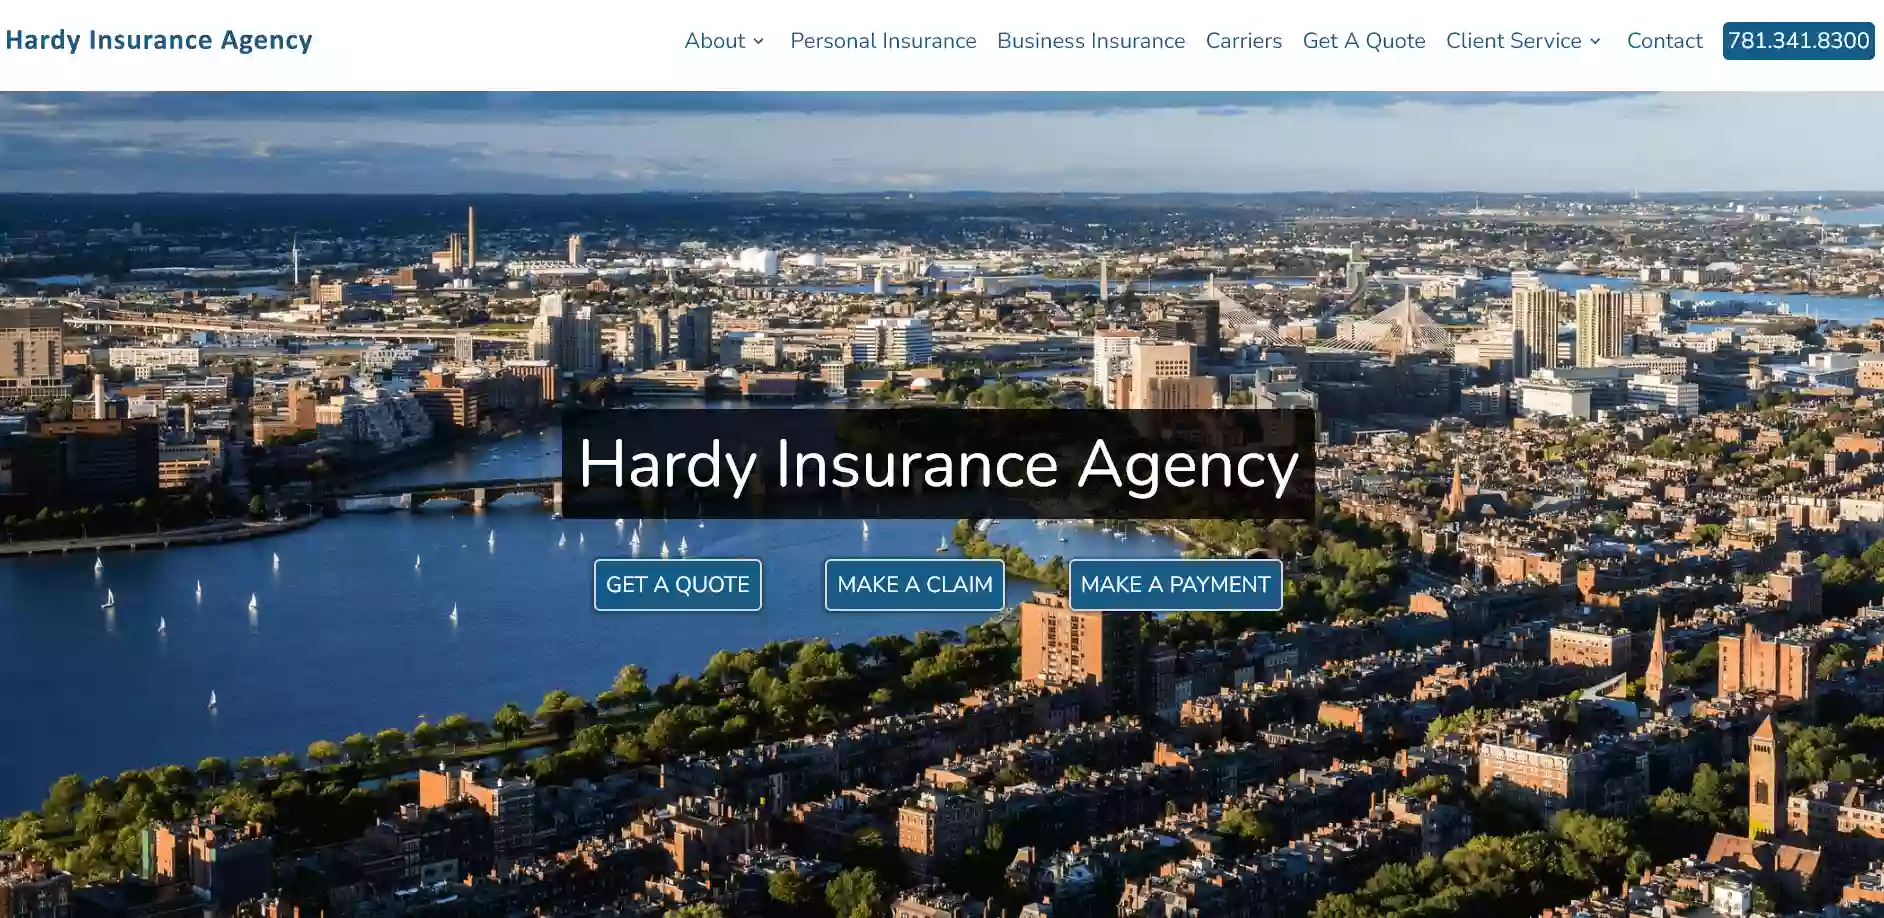 Hardy Insurance Agency